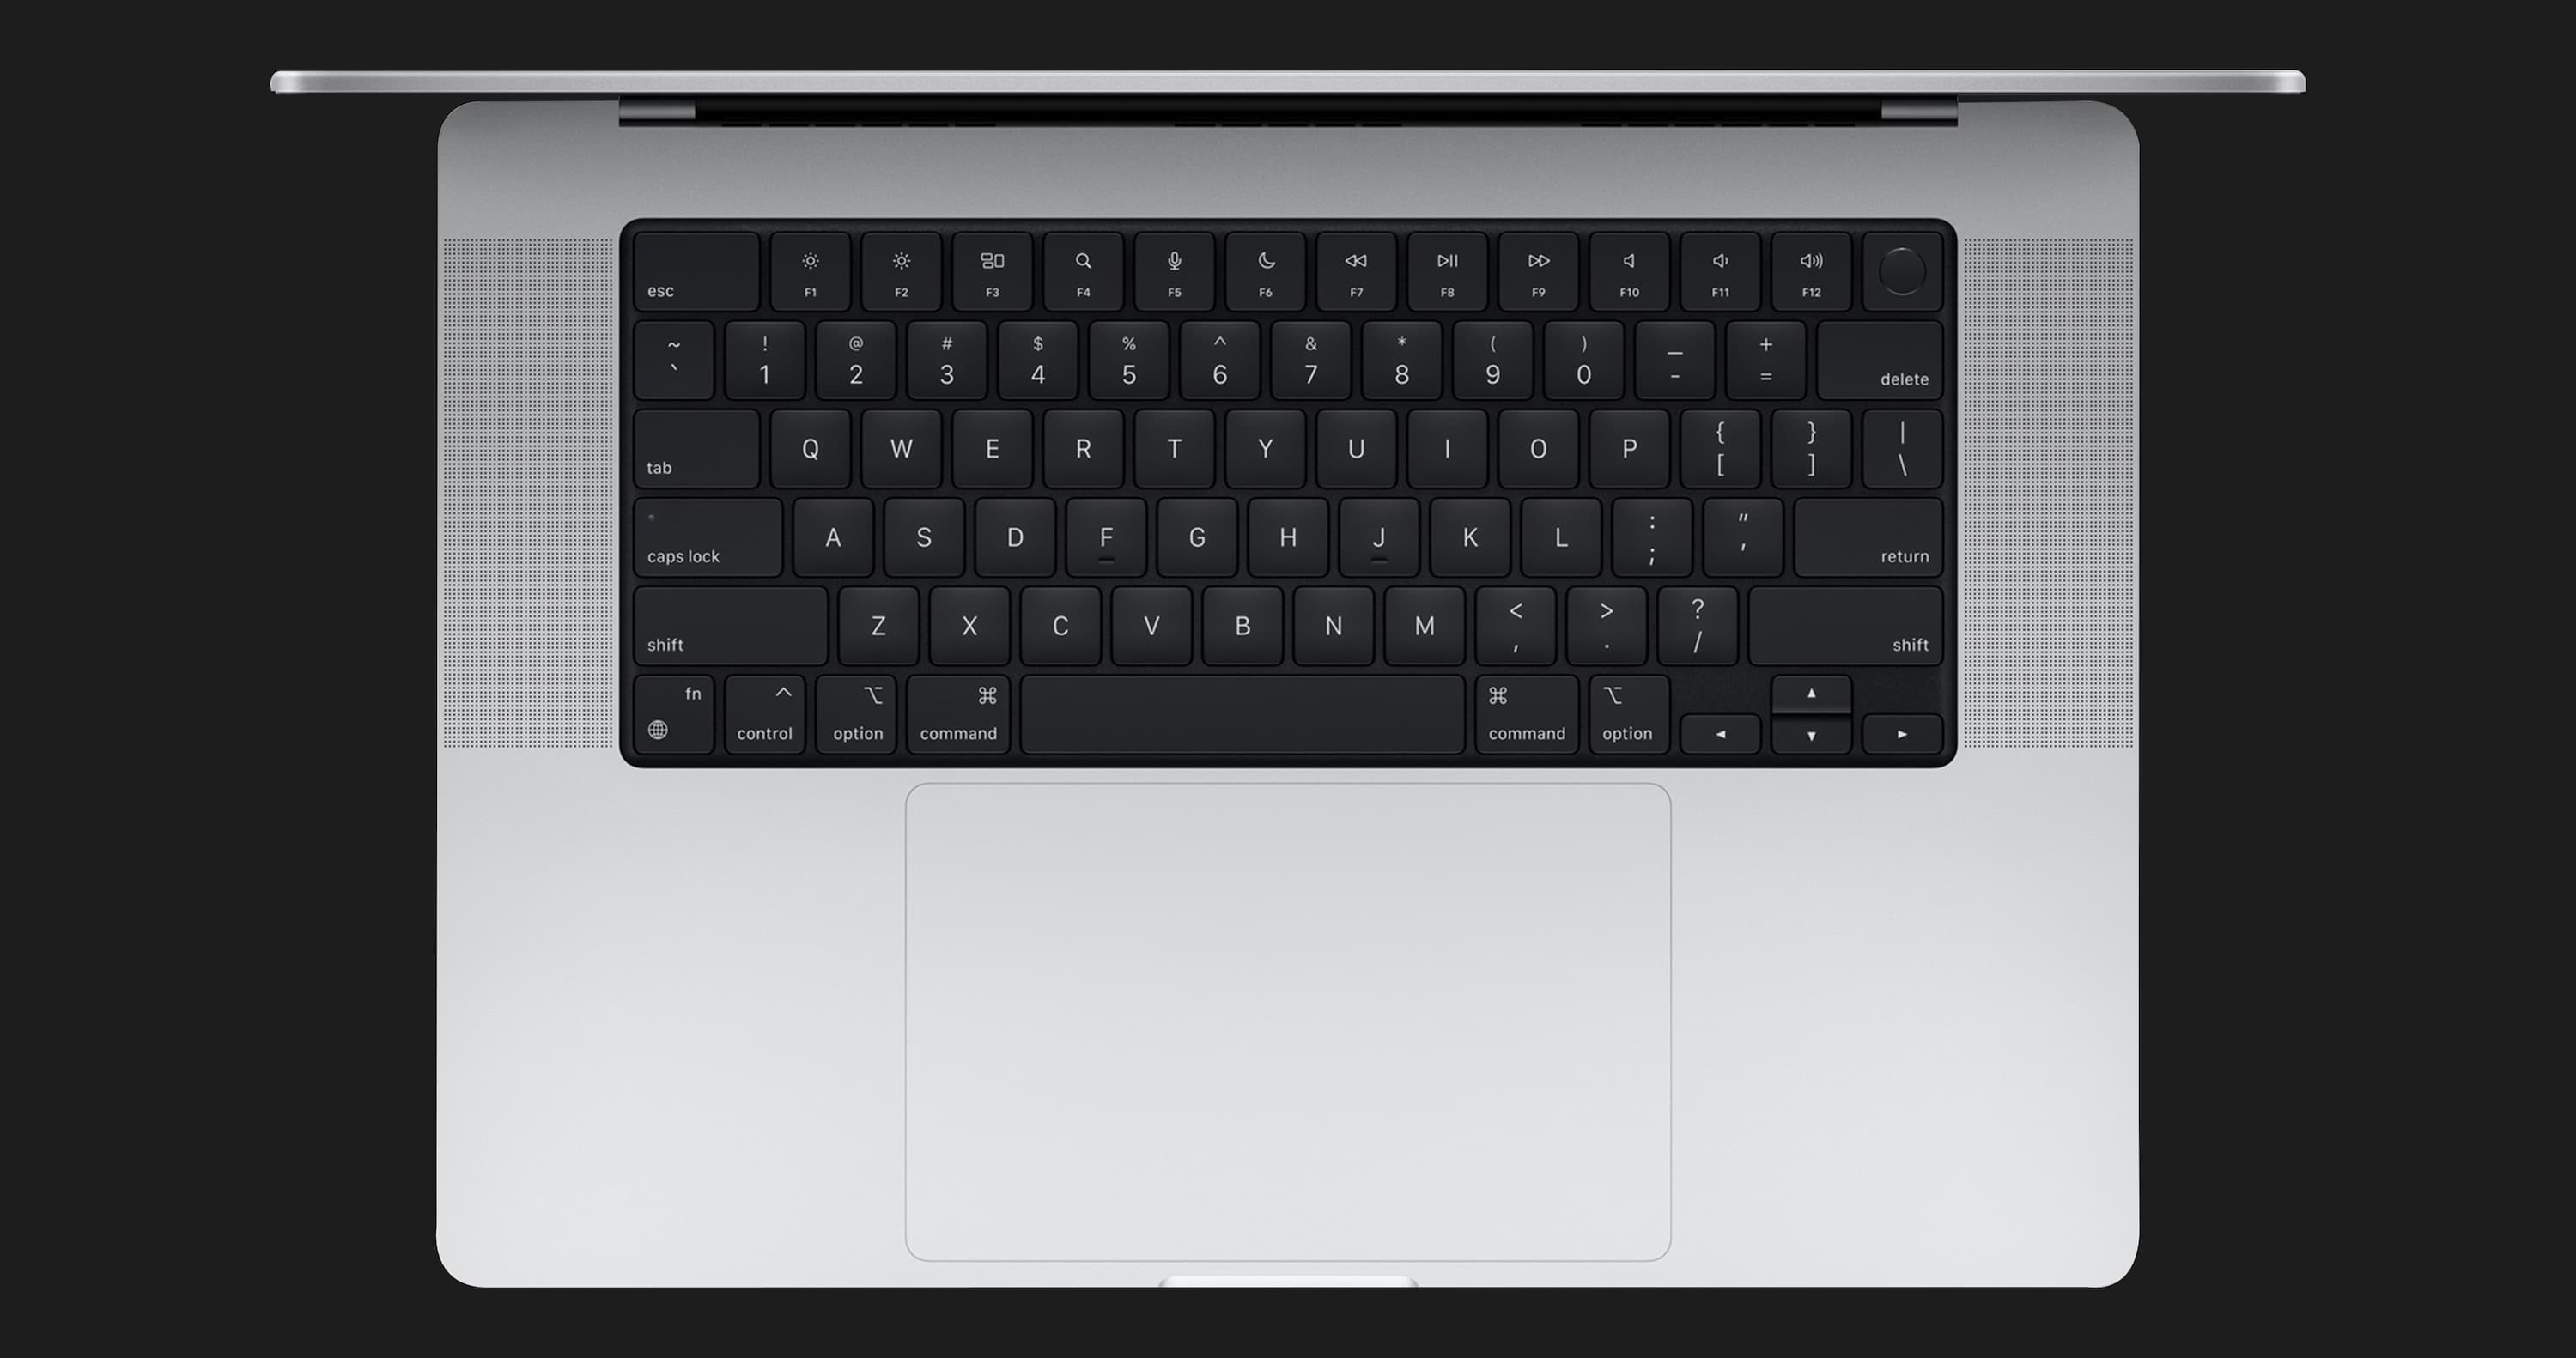 https://jabko.ua/image/catalog/products/2022/05/171627/Apple_MacBook-Pro_16-inch-Keyboard_10182021.jpg